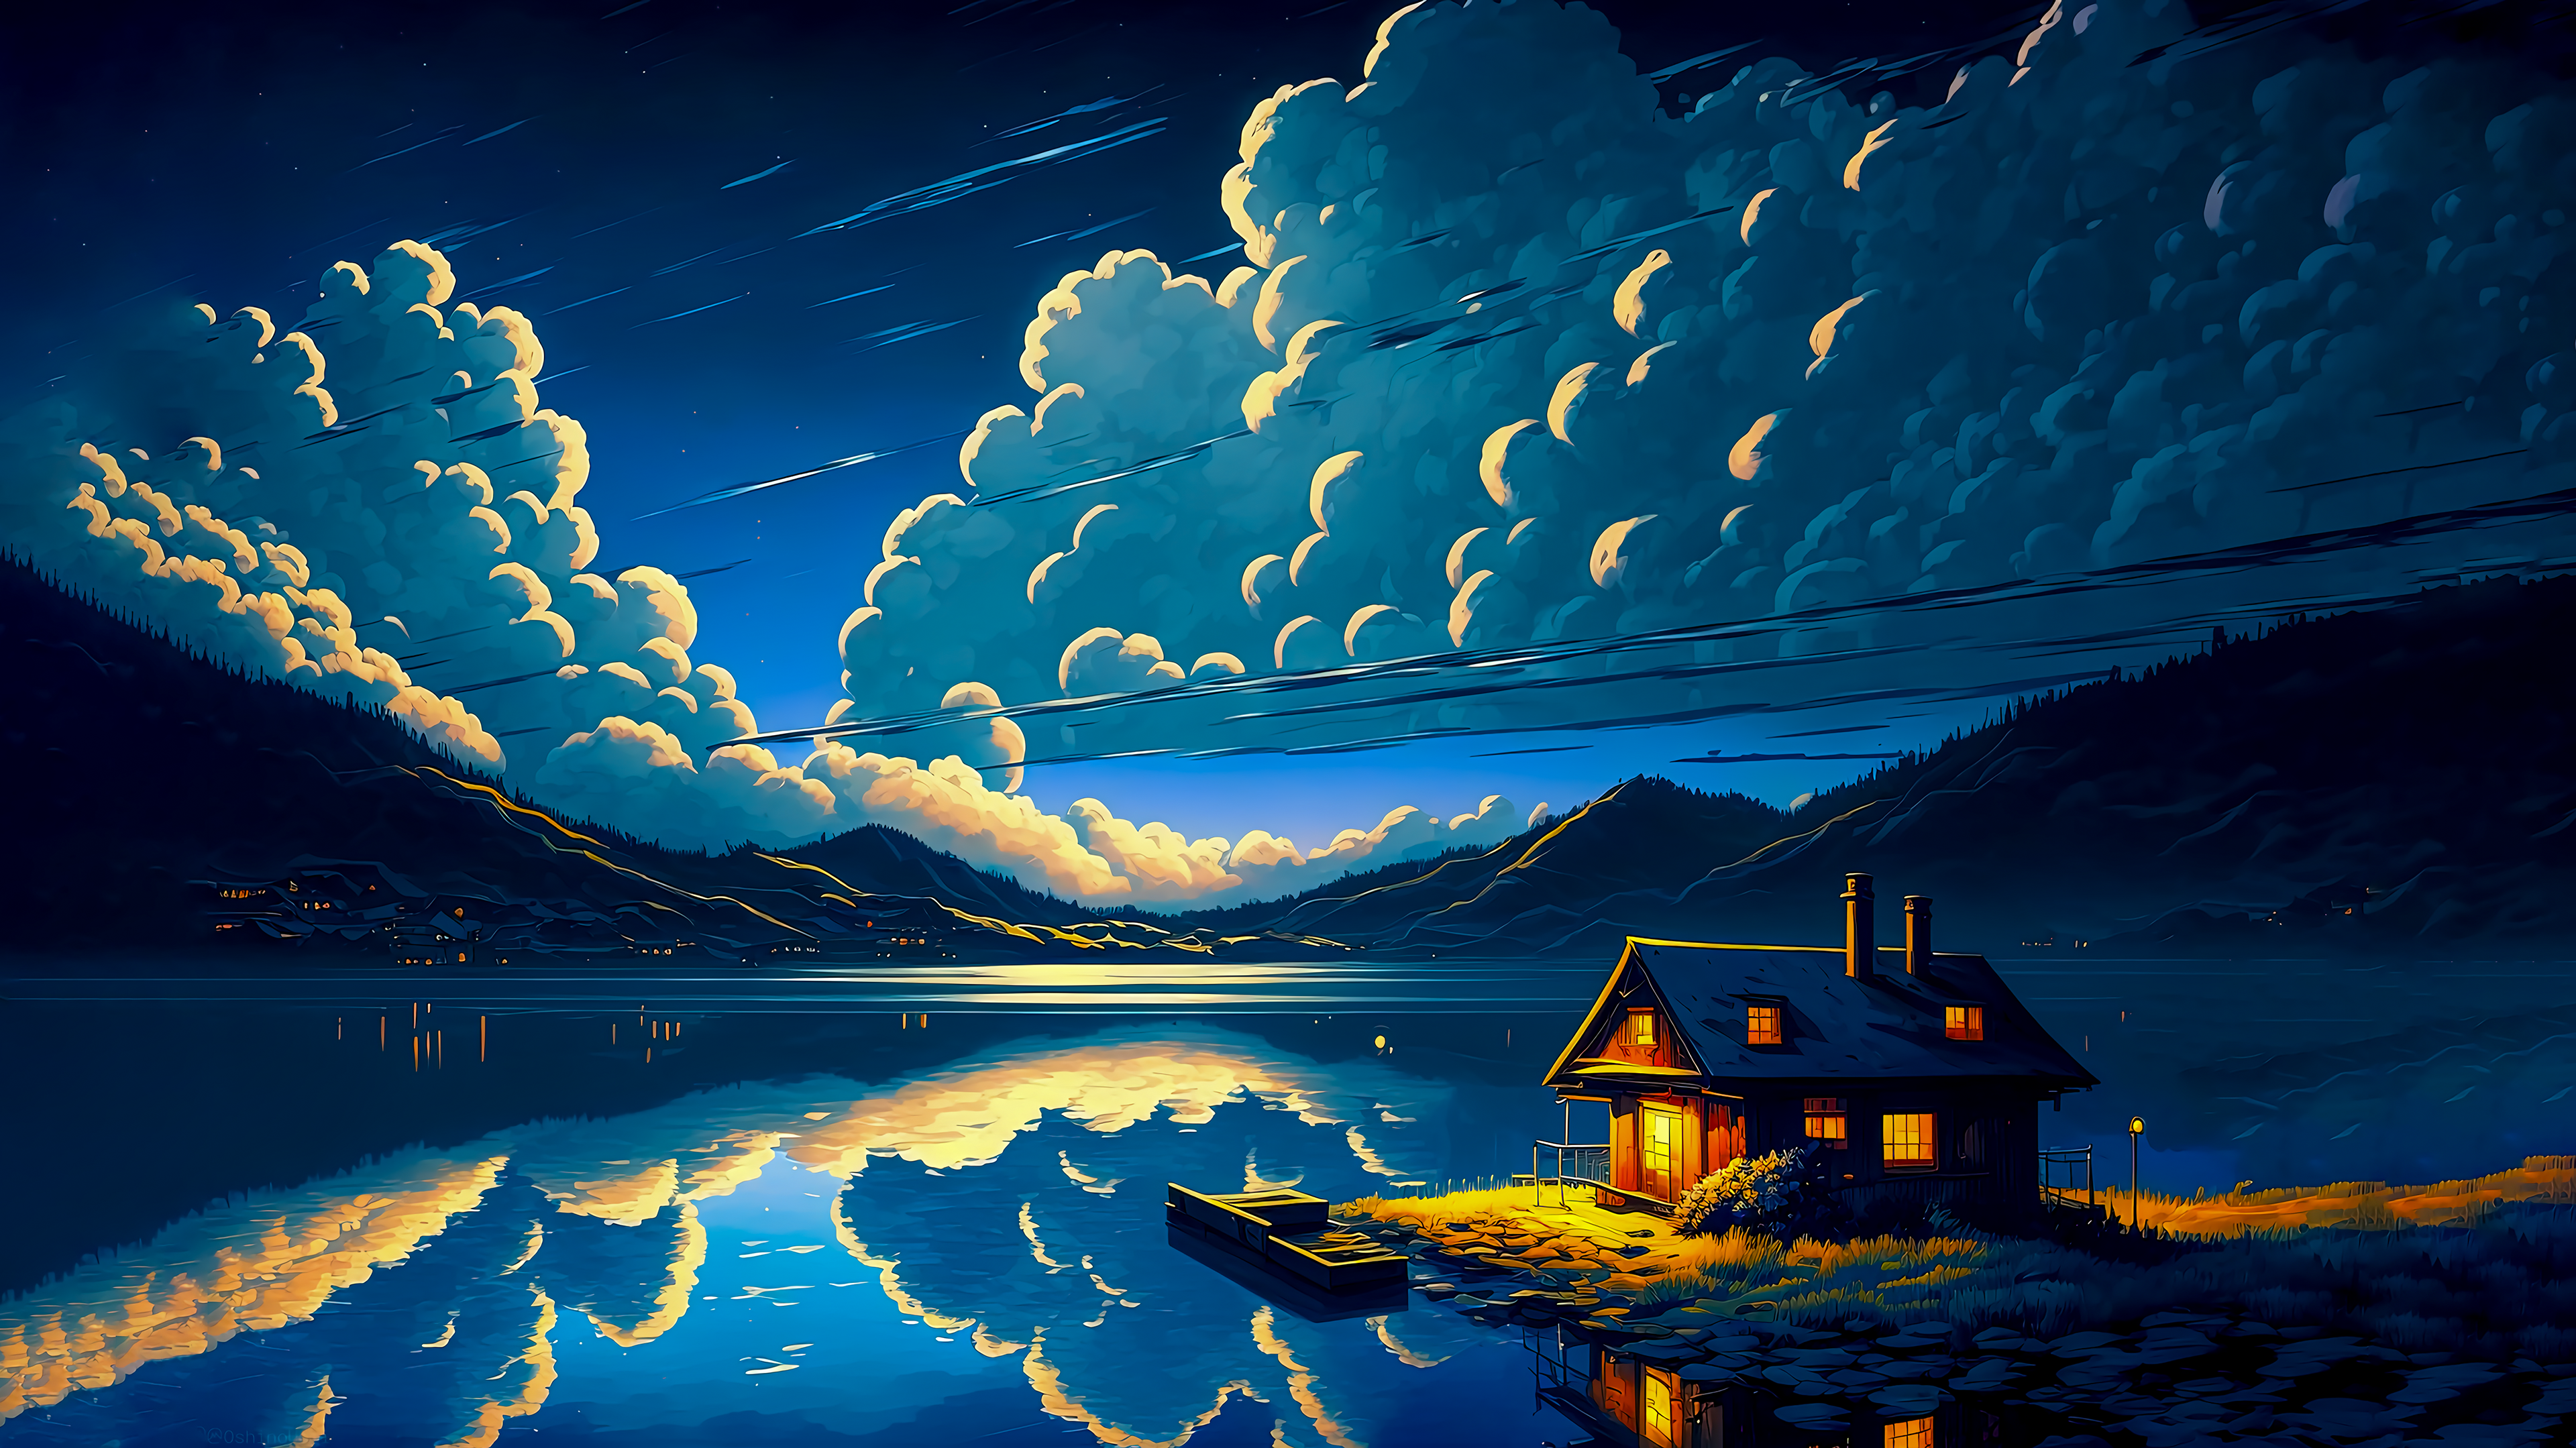 4k Pc Wallpaper Chill Lake Landscape Illustration